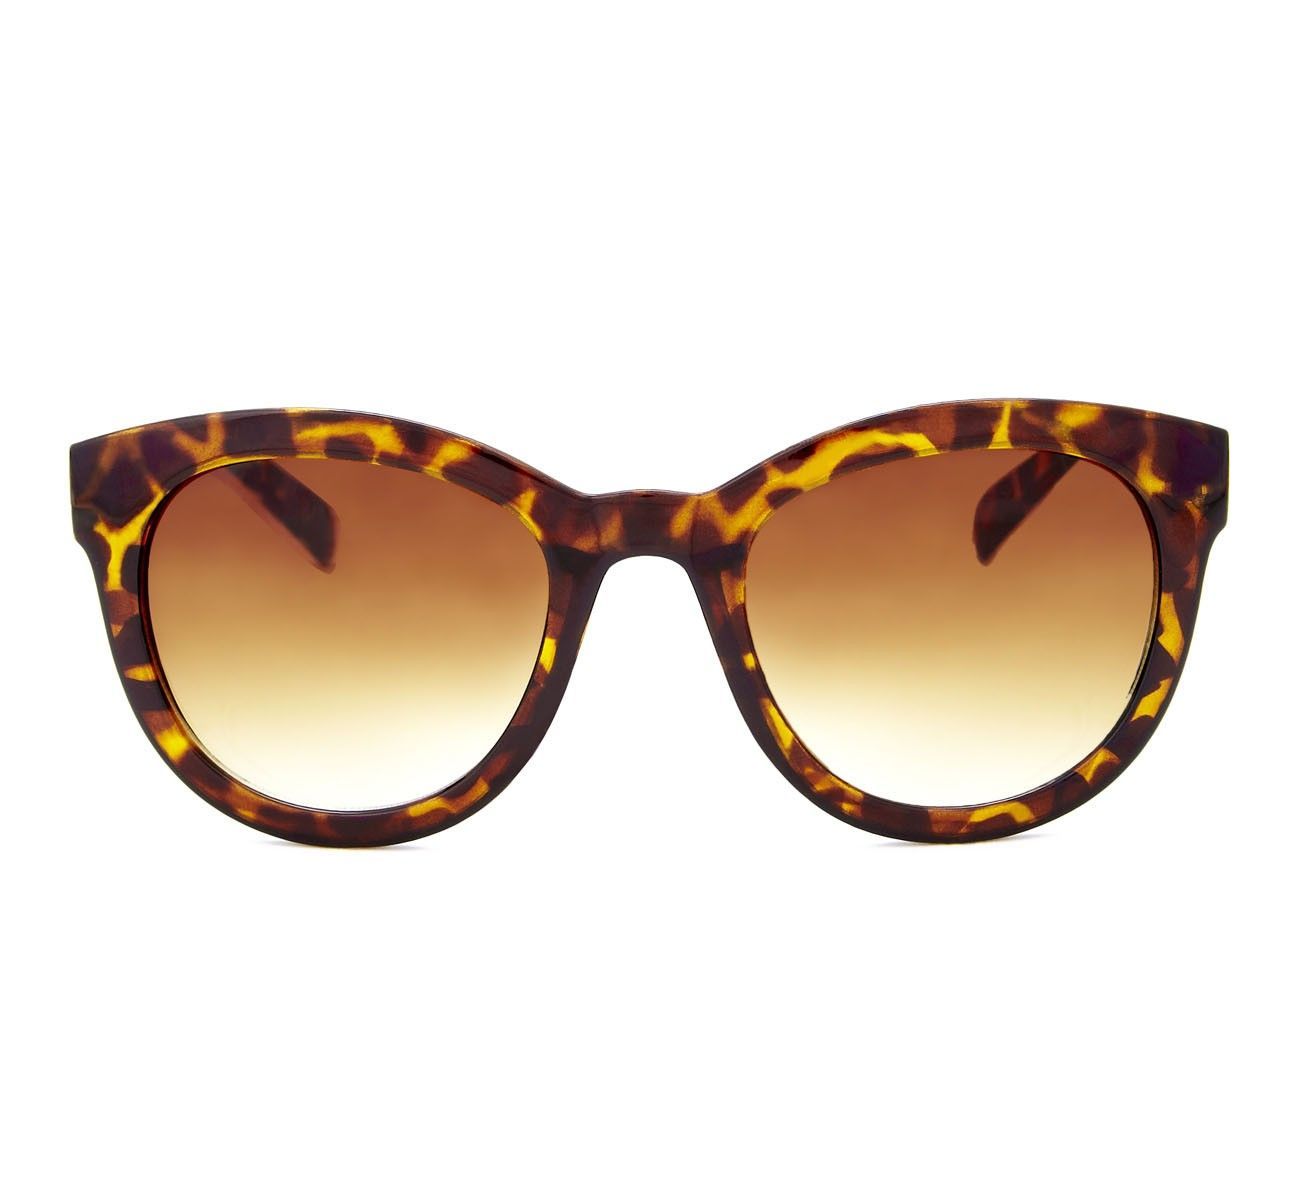 Best Sunglasses for Your Face Shape – Designer Sunglasses for Women #Rayban #sunglasses #fashion